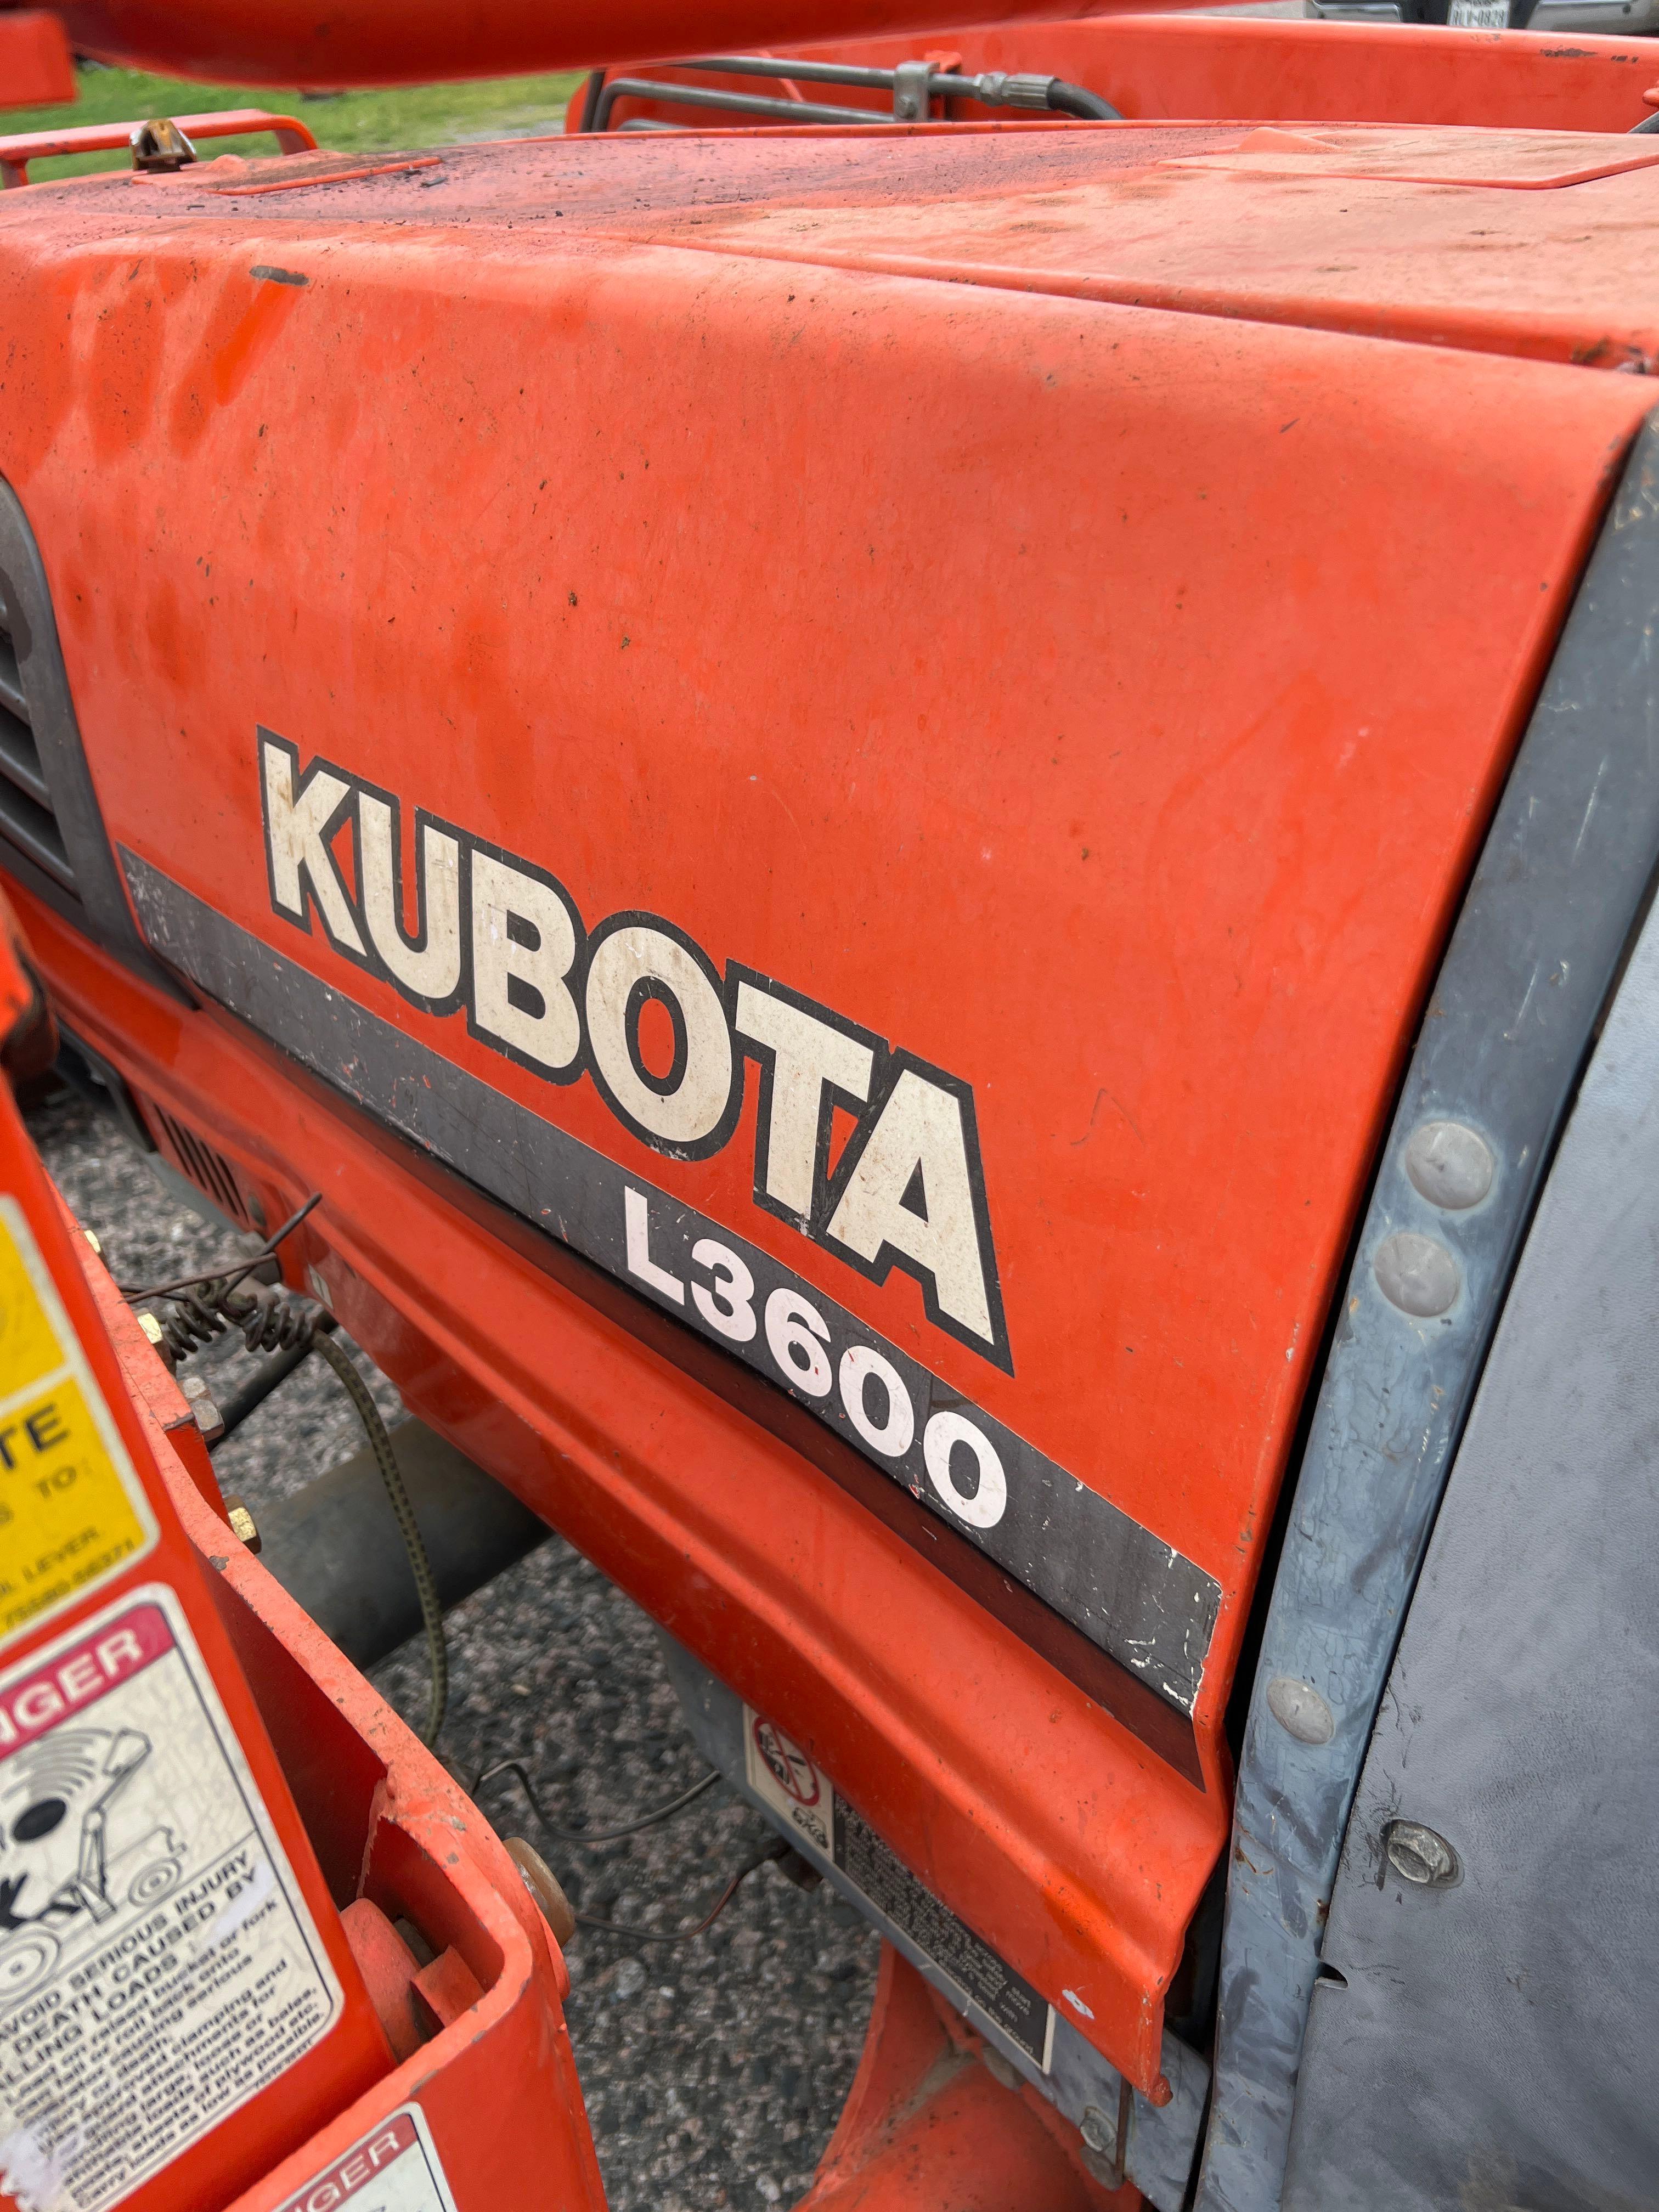 Kubota L3600 Tractor - 1717 hours - 2wd - Glide Shift Transmission - Runs